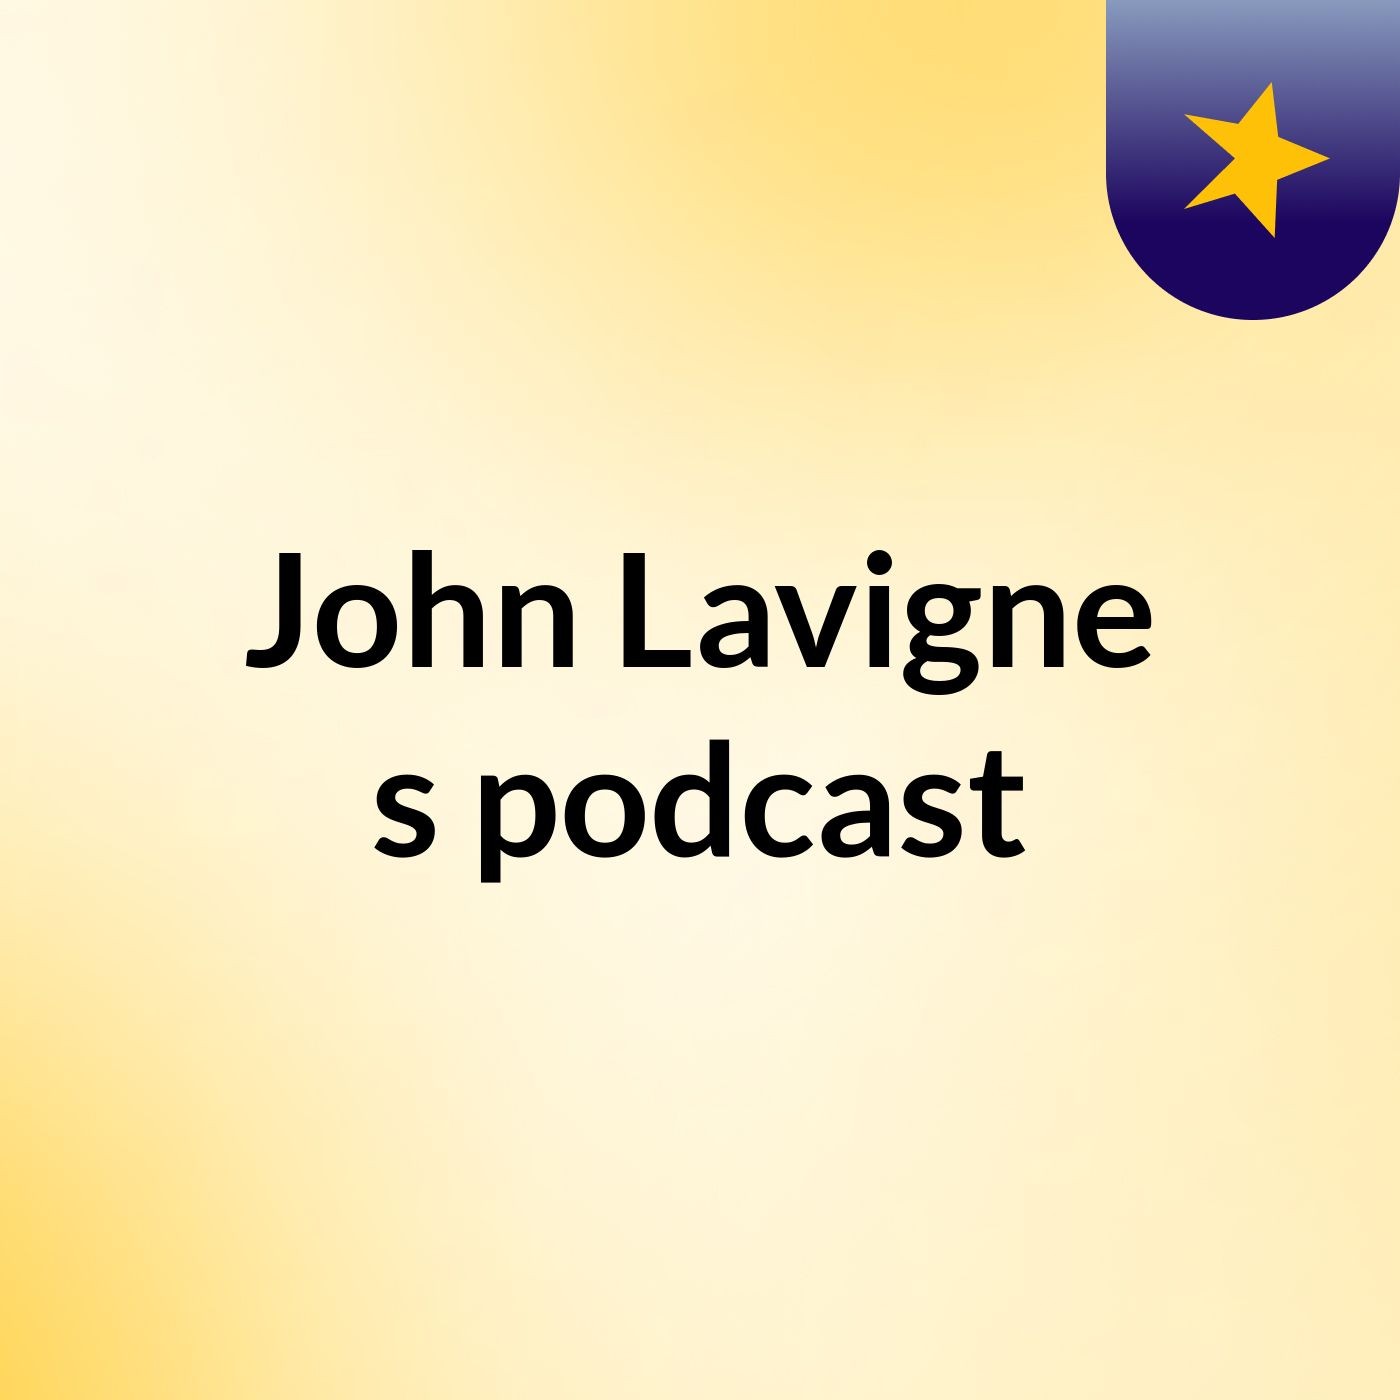 John Lavigne's podcast